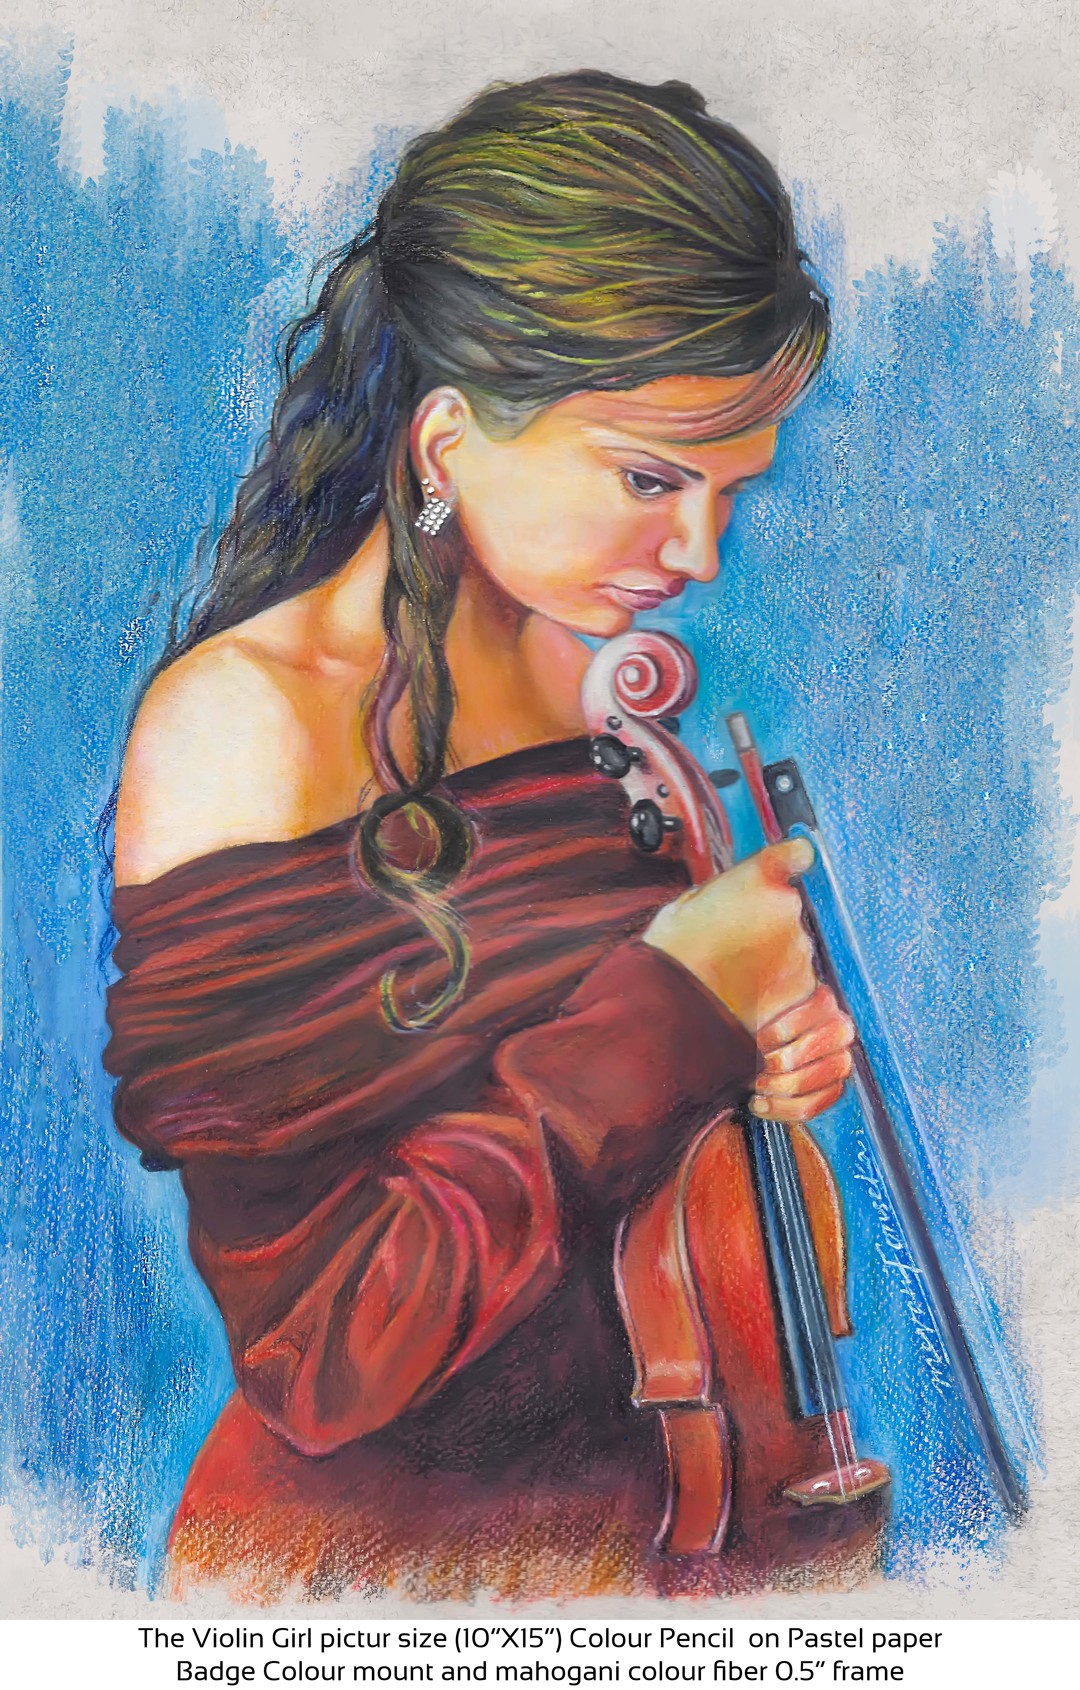 The Girl play the Violin by MEVAN FONSEKA